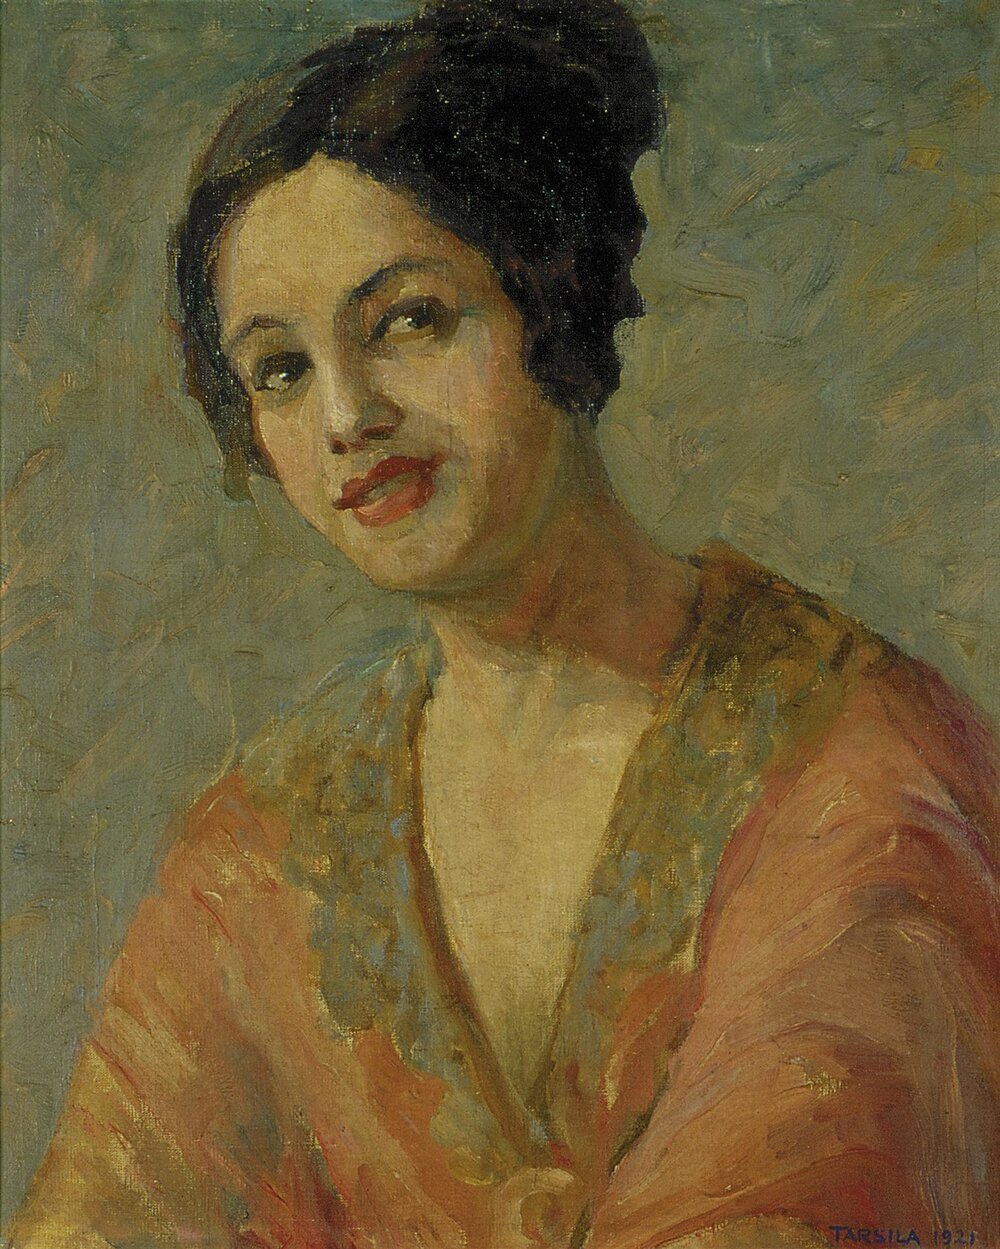 "Autorretrato con vestido naranjo" por Tarsila do Amaral, 1921